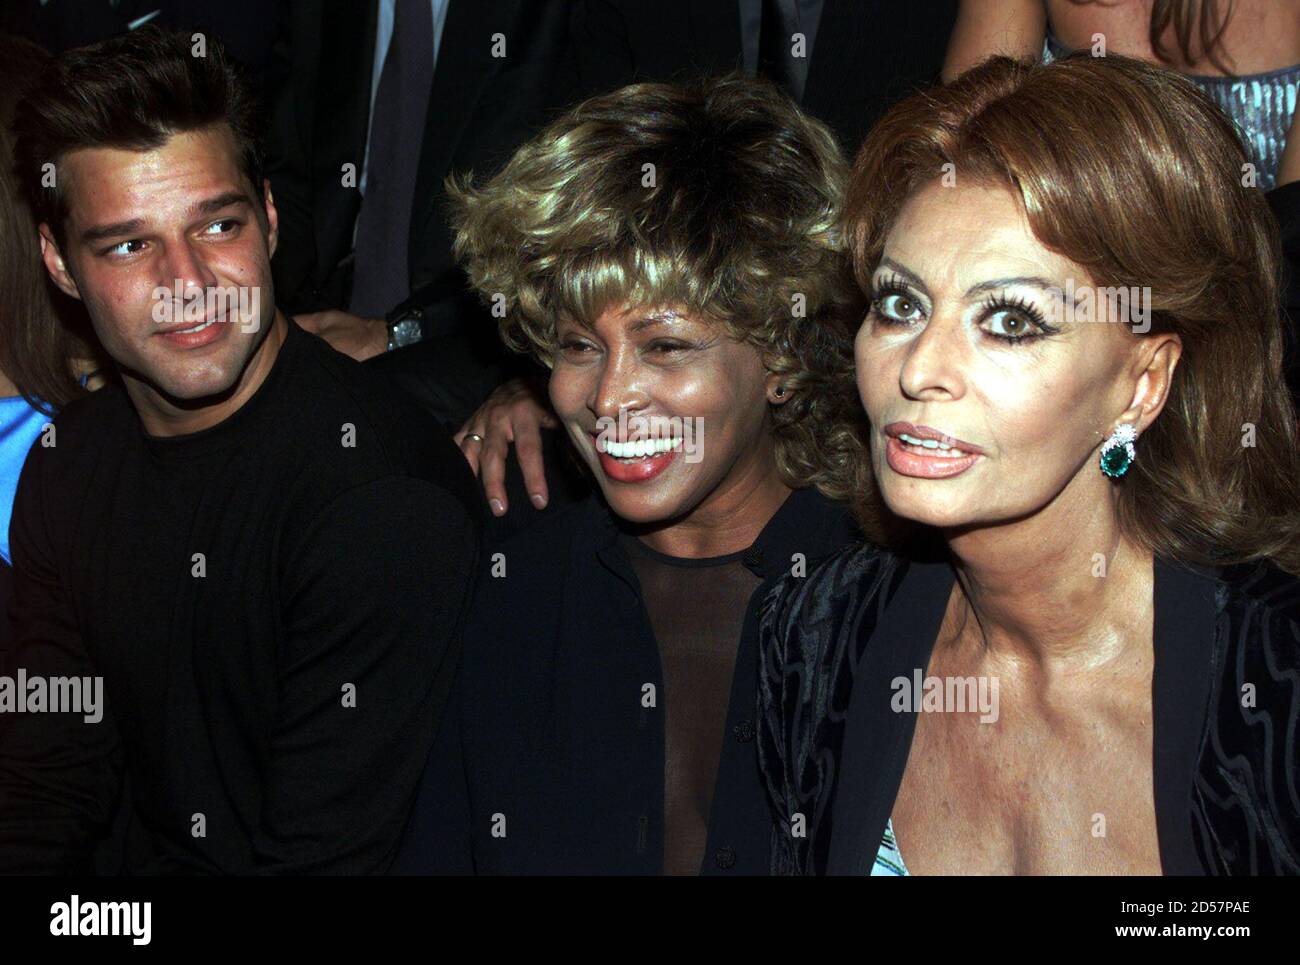 U.S. ROCKSTAR TINA TURNER AVEC RICKY MARTIN ET SOFIA LOREN À GIORGIO ARMANI  PRINTEMPS/ÉTÉ COLLECTION 2000 AU SALON DE LA MODE DE MILAN. La rockstar  américaine Tina Turner (C) avec la chanteuse